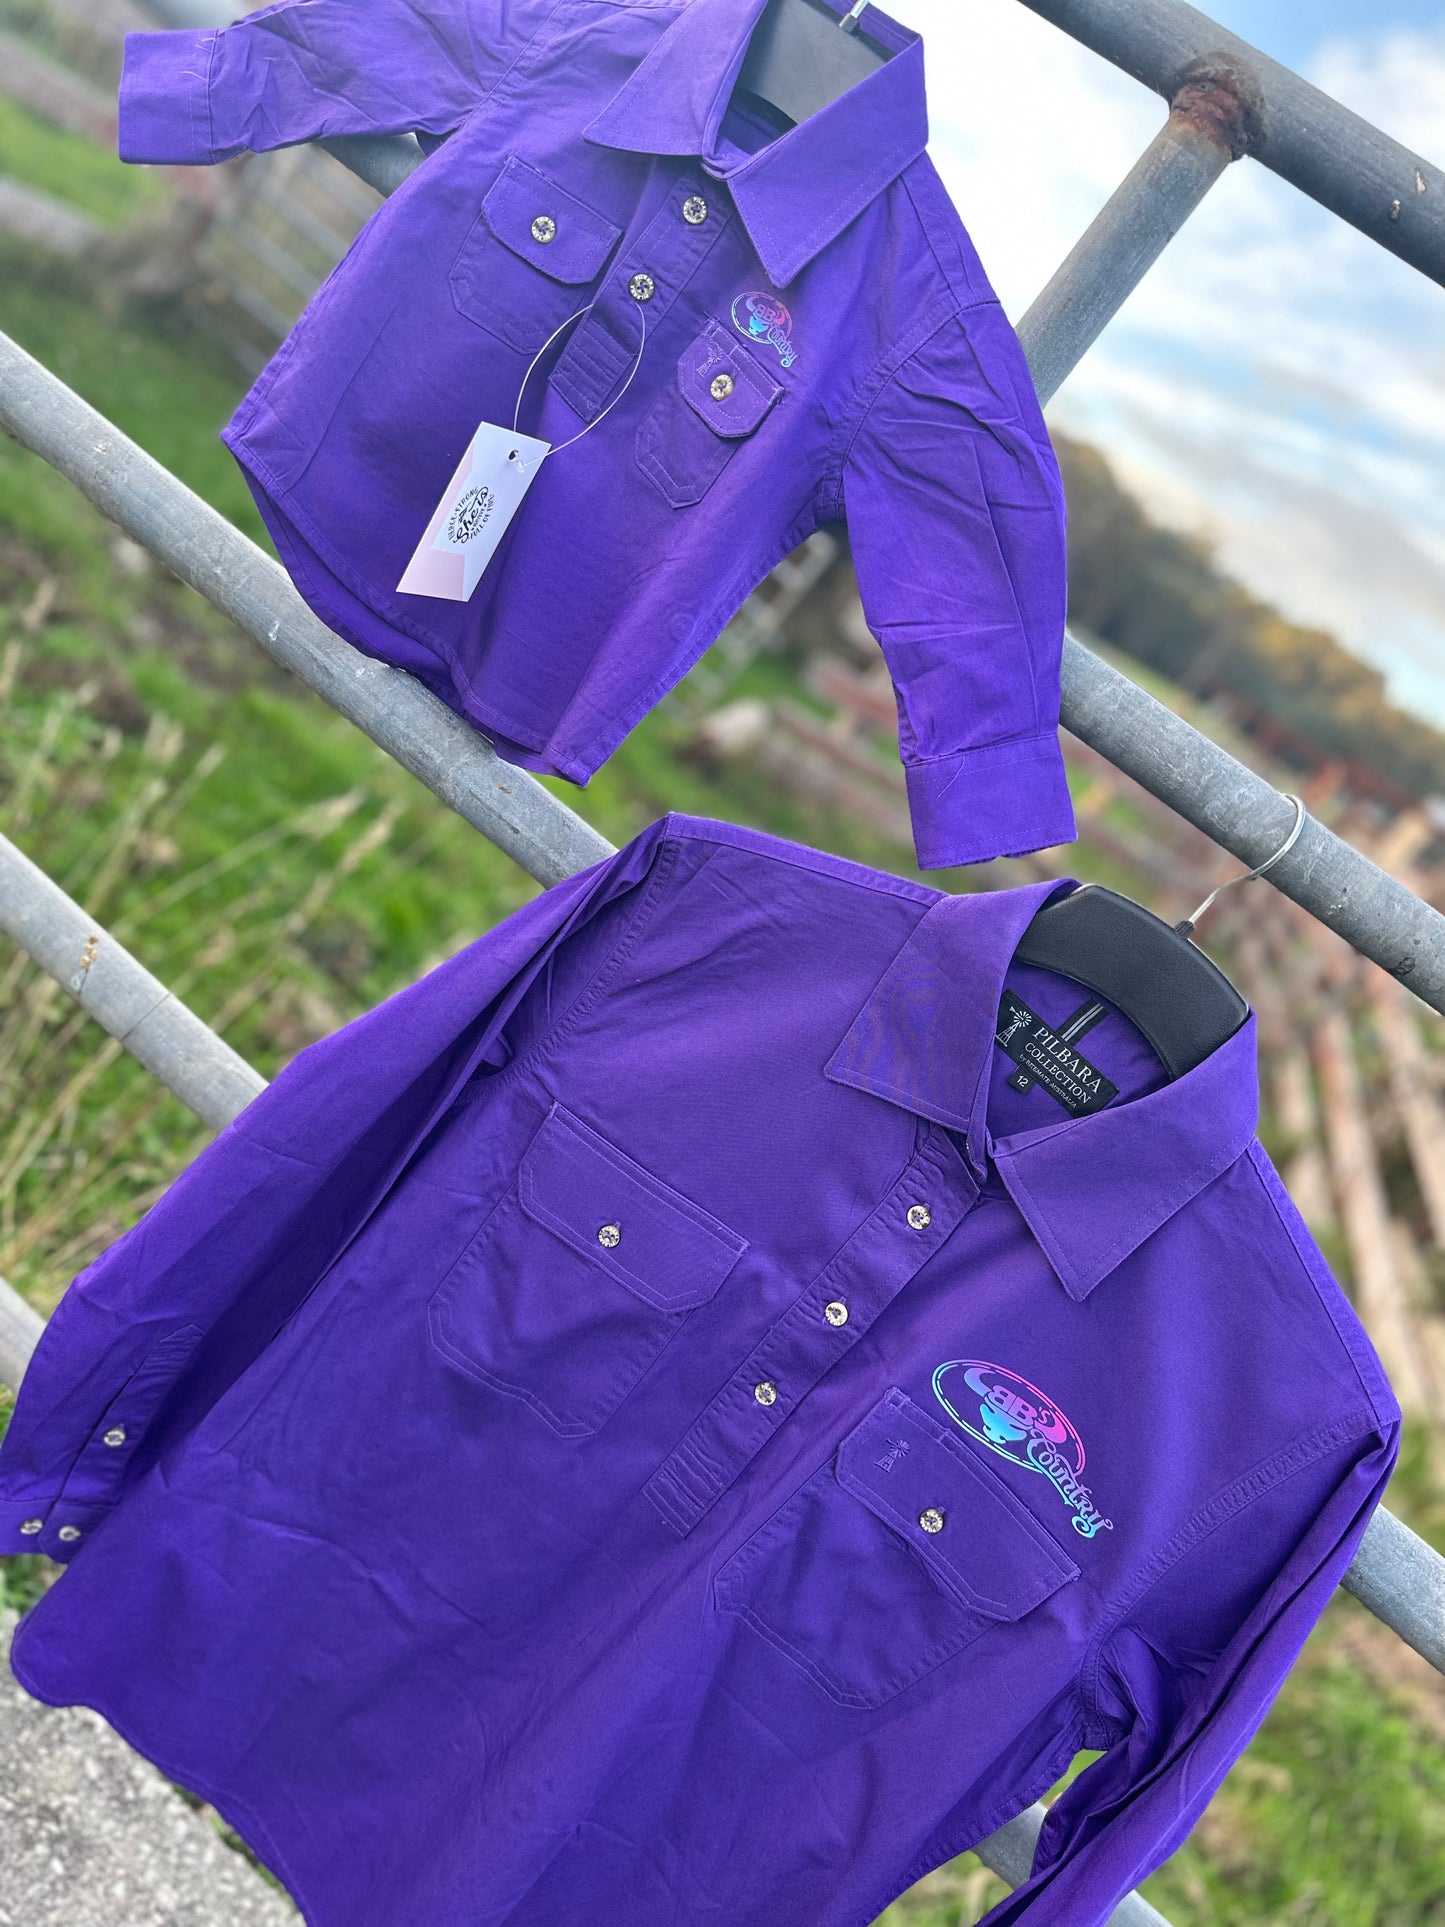 BB’s Country - Purple Gradient Shirt